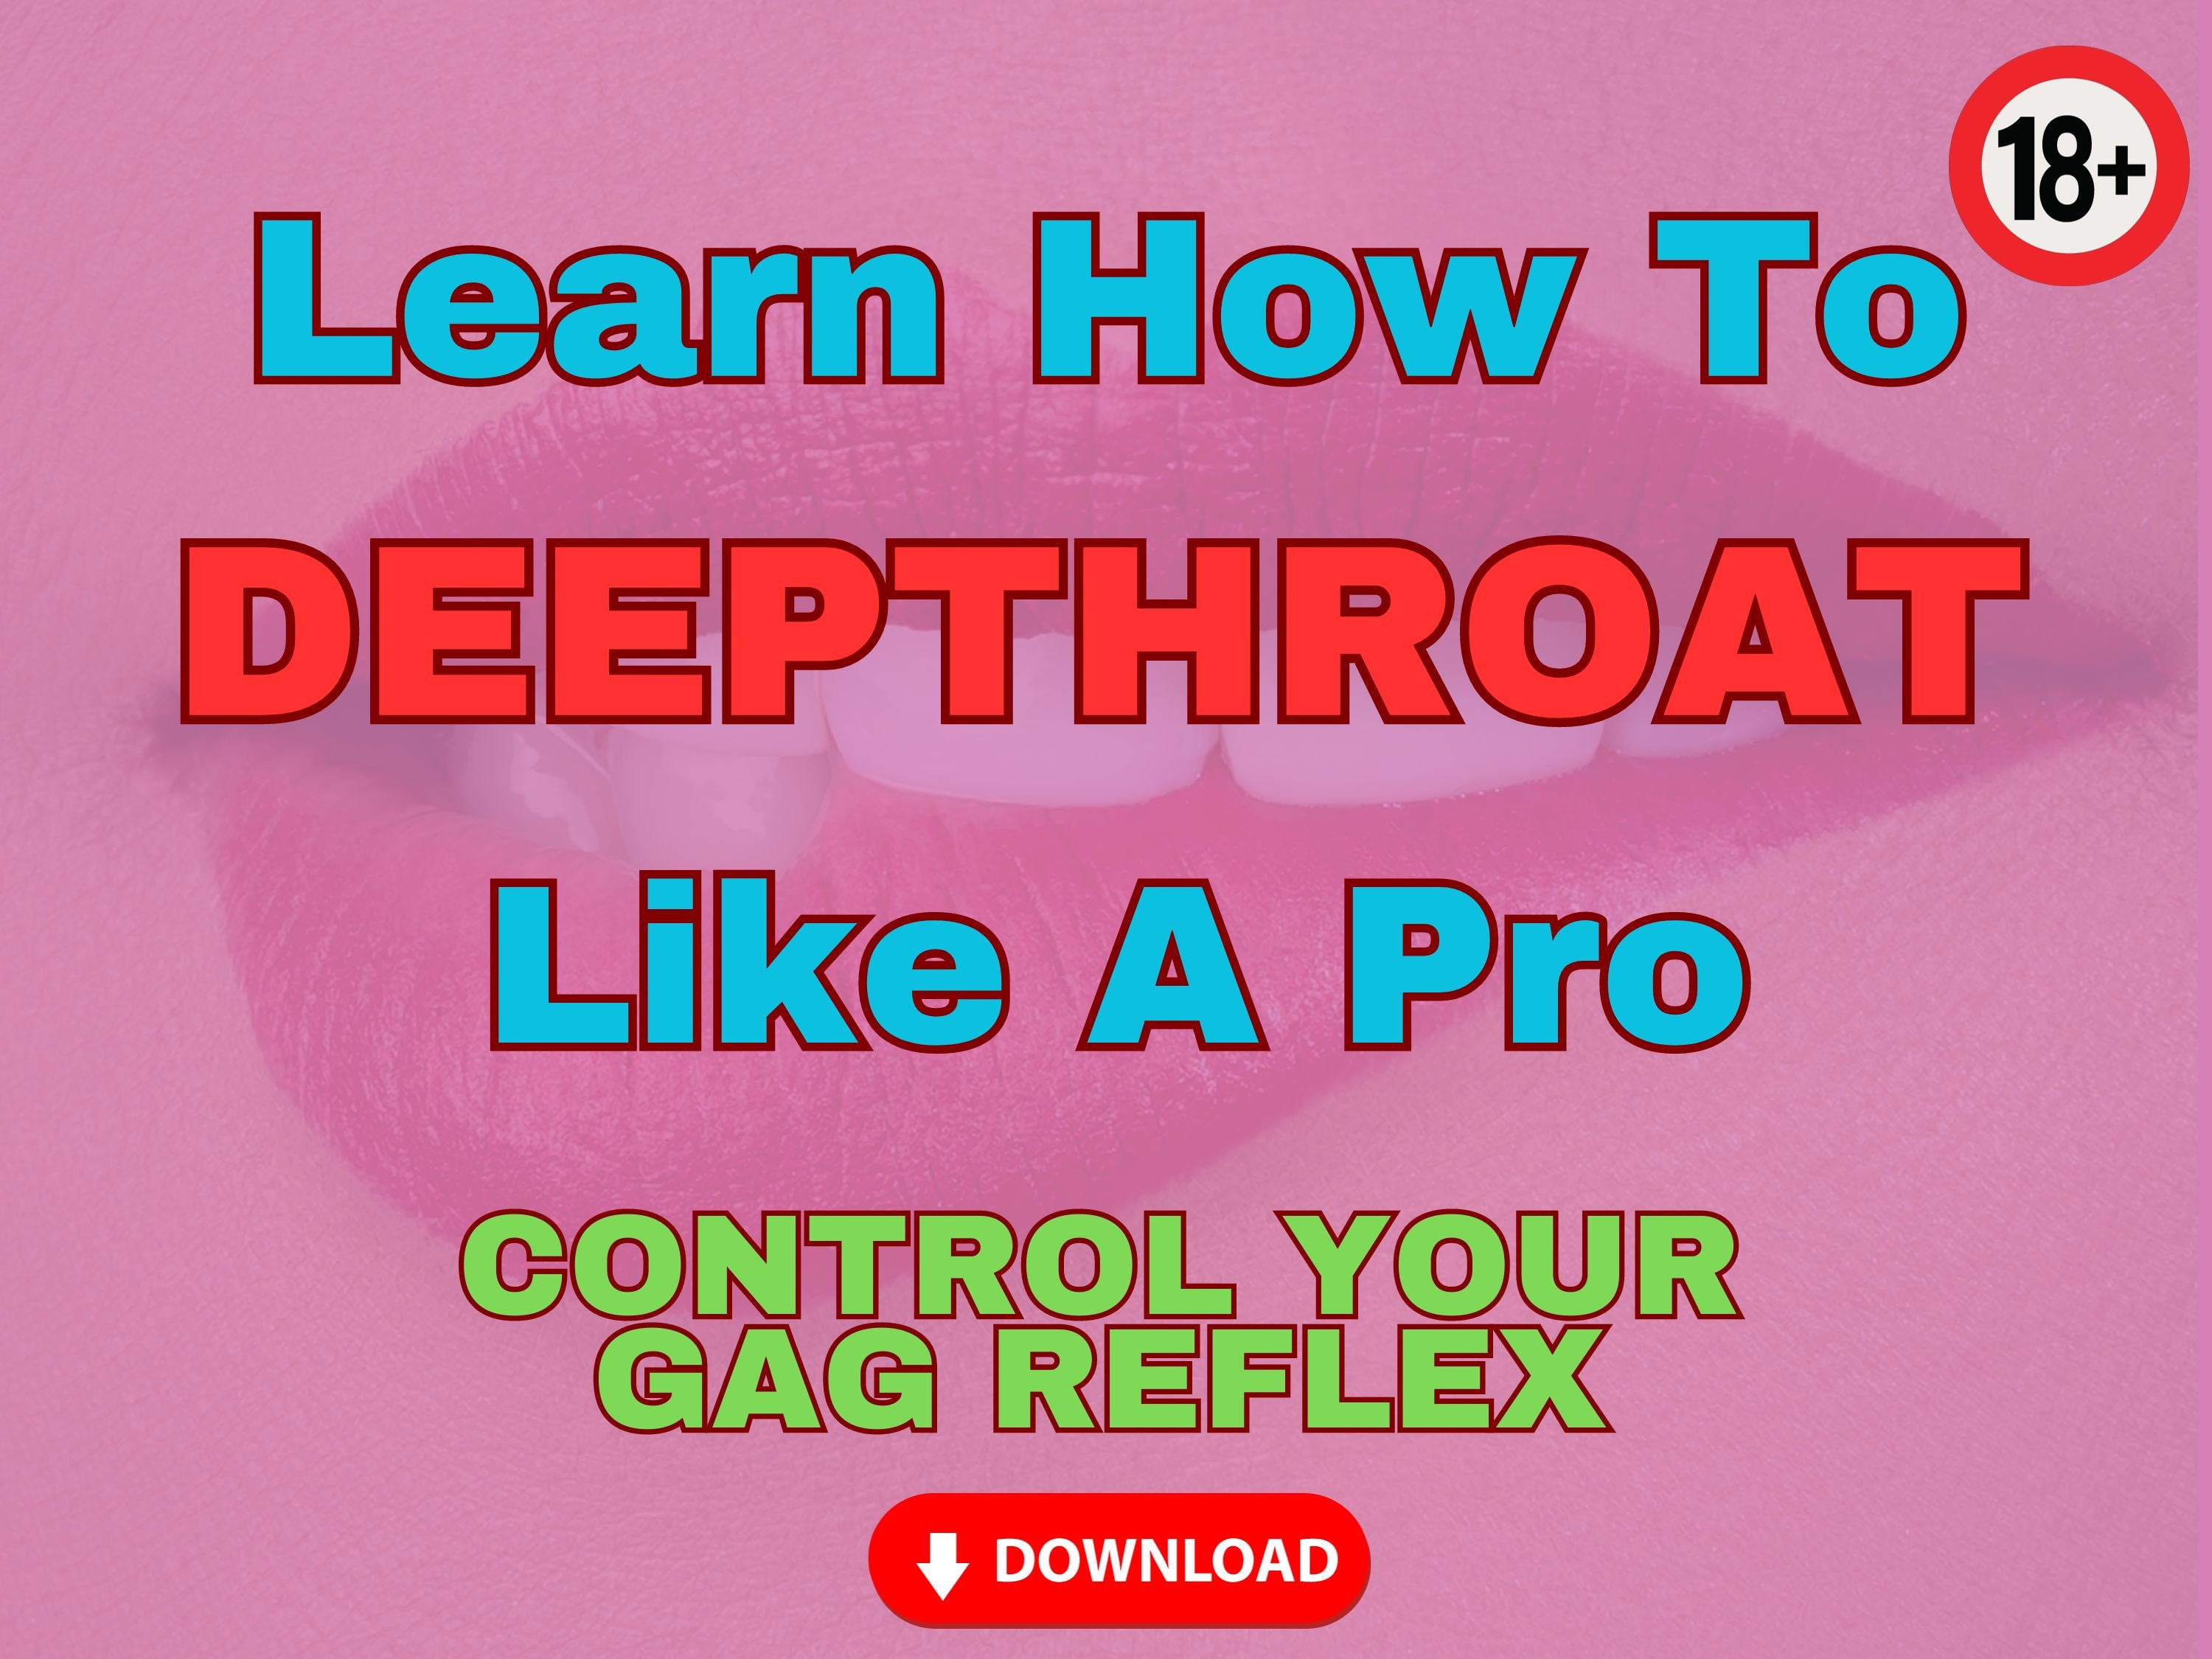 bartosz kruk recommends how to deepthroat like a pro pic